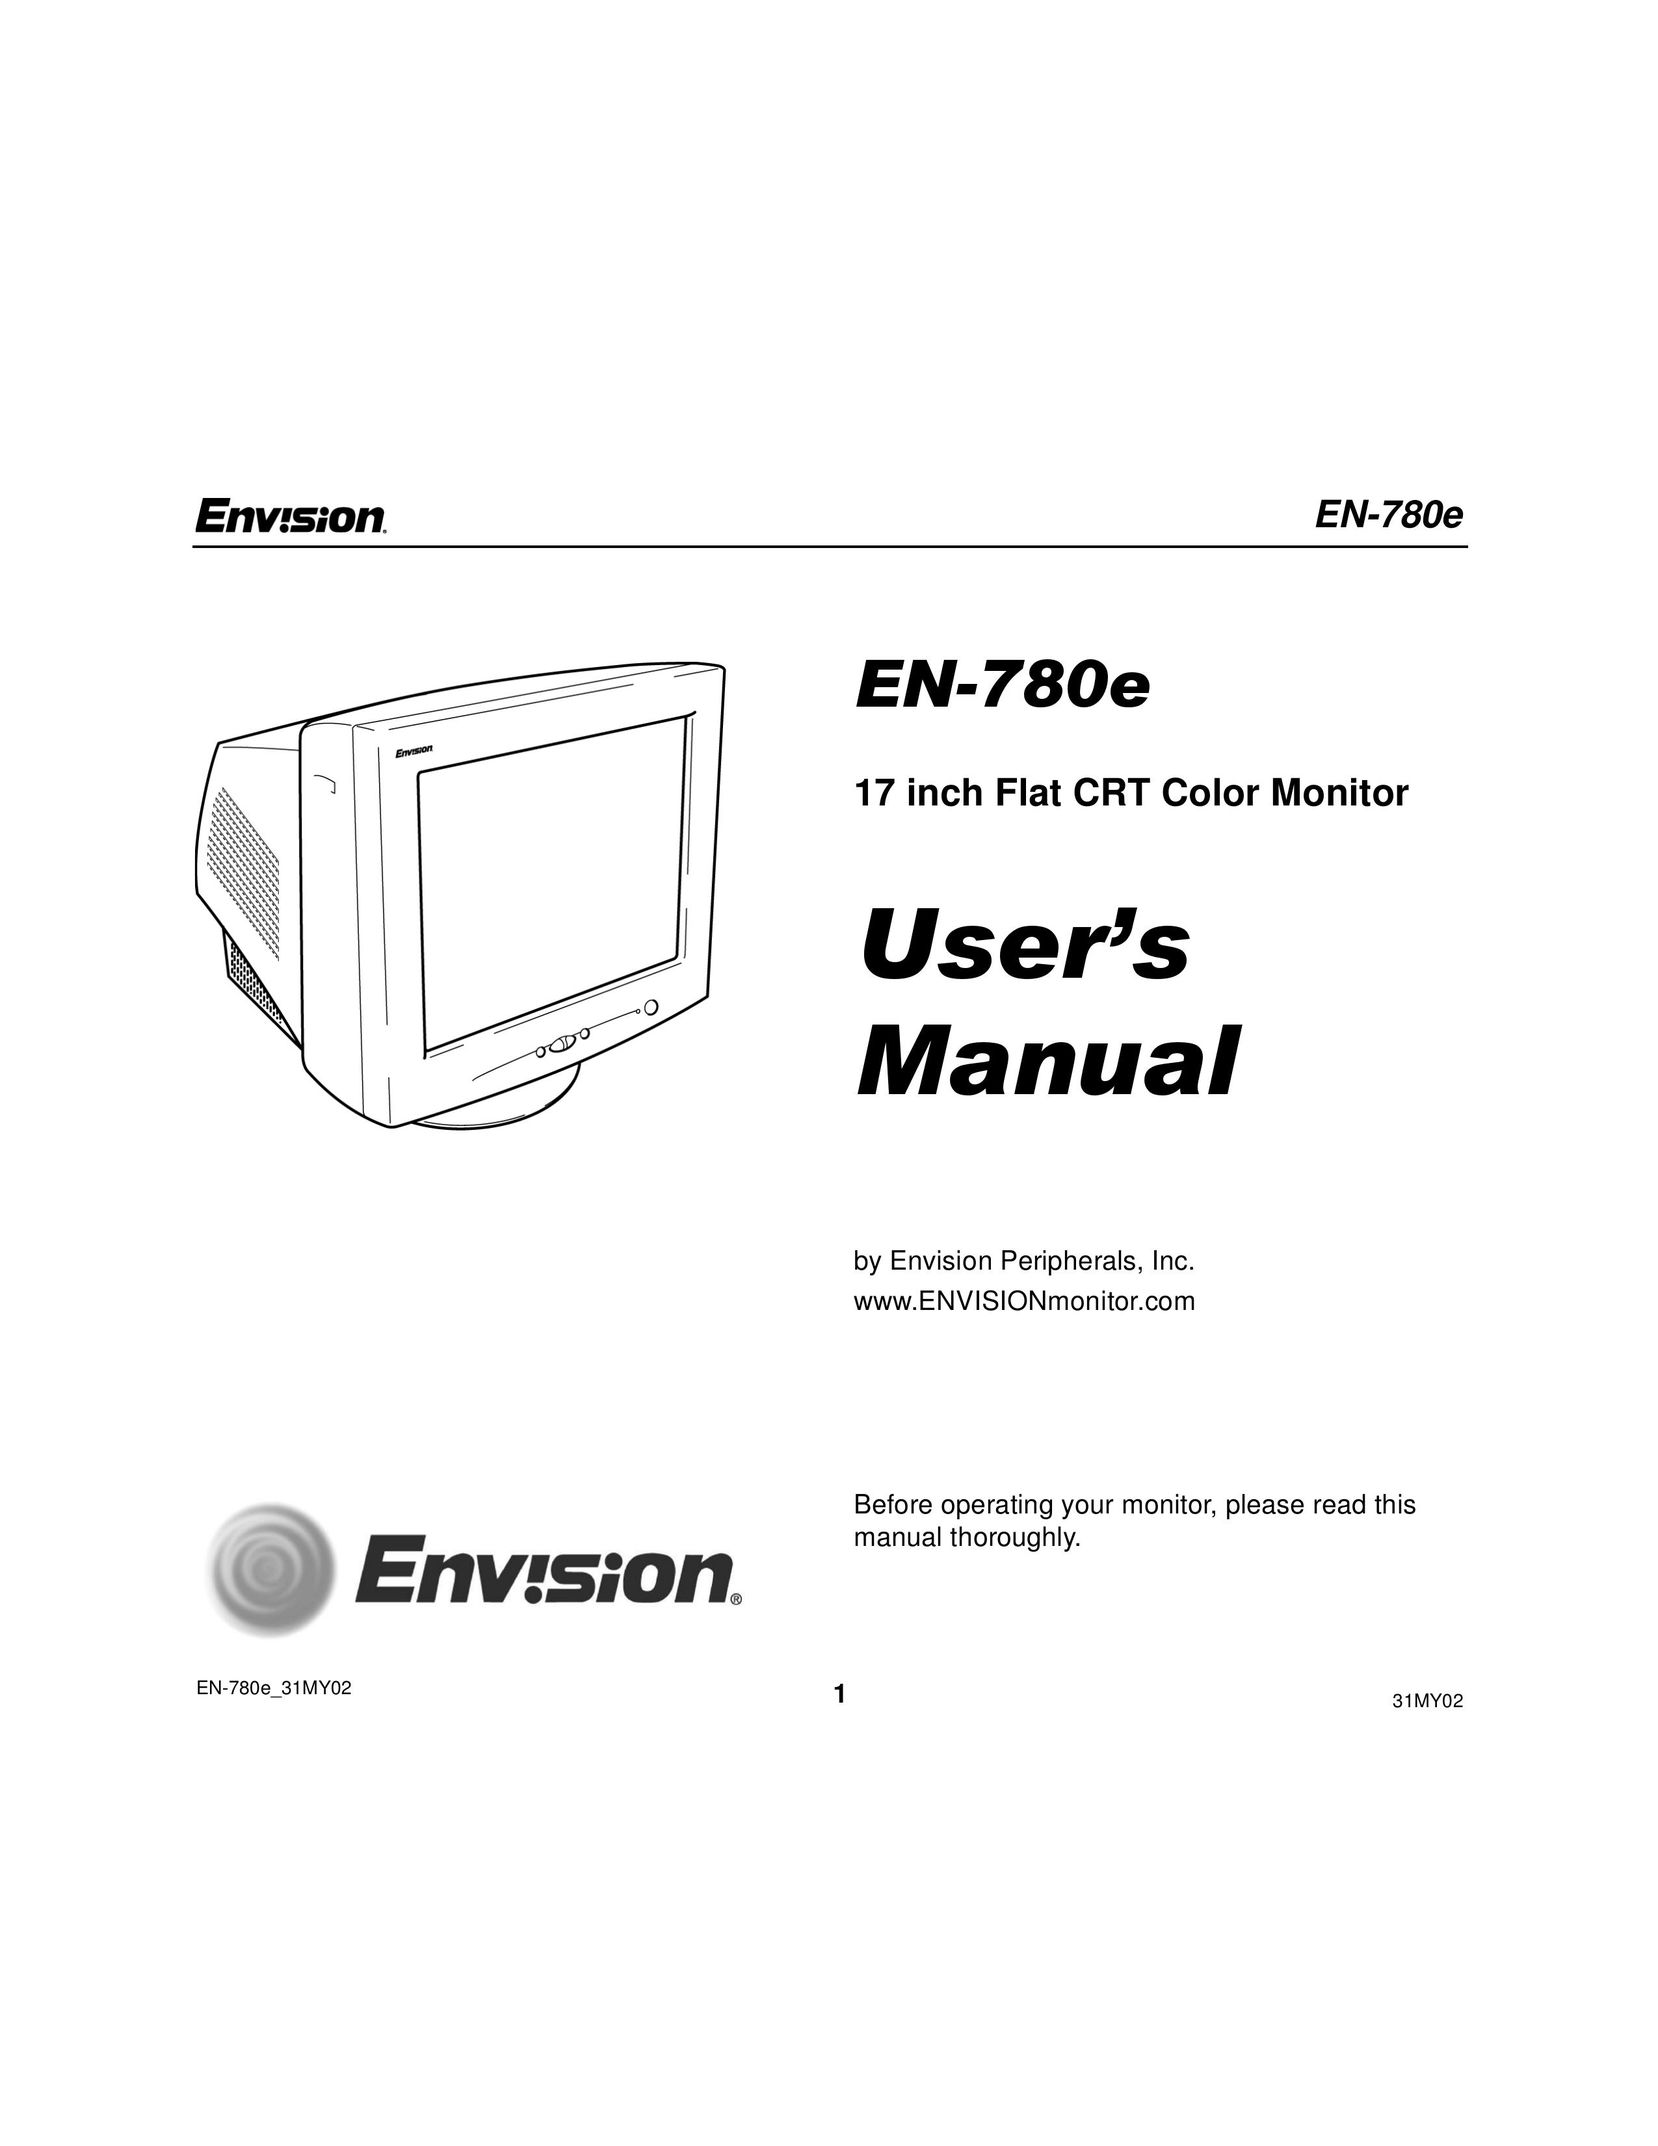 Envision Peripherals EN-780e Computer Monitor User Manual